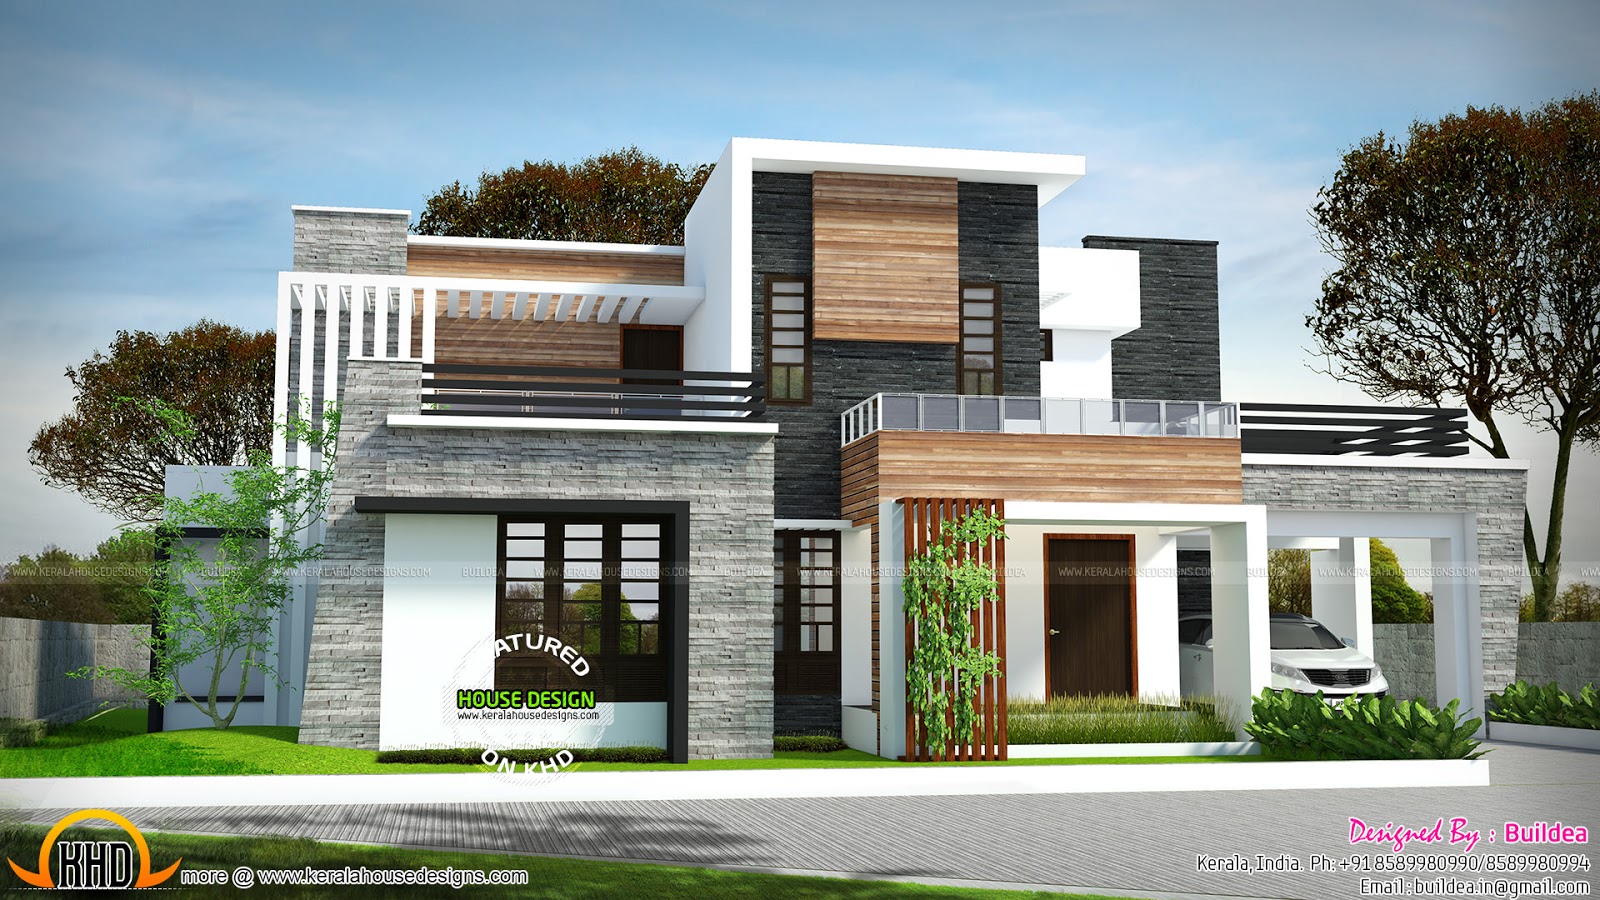 2729 sq ft 4  bedroom  flat roof modern house  Kerala  home  